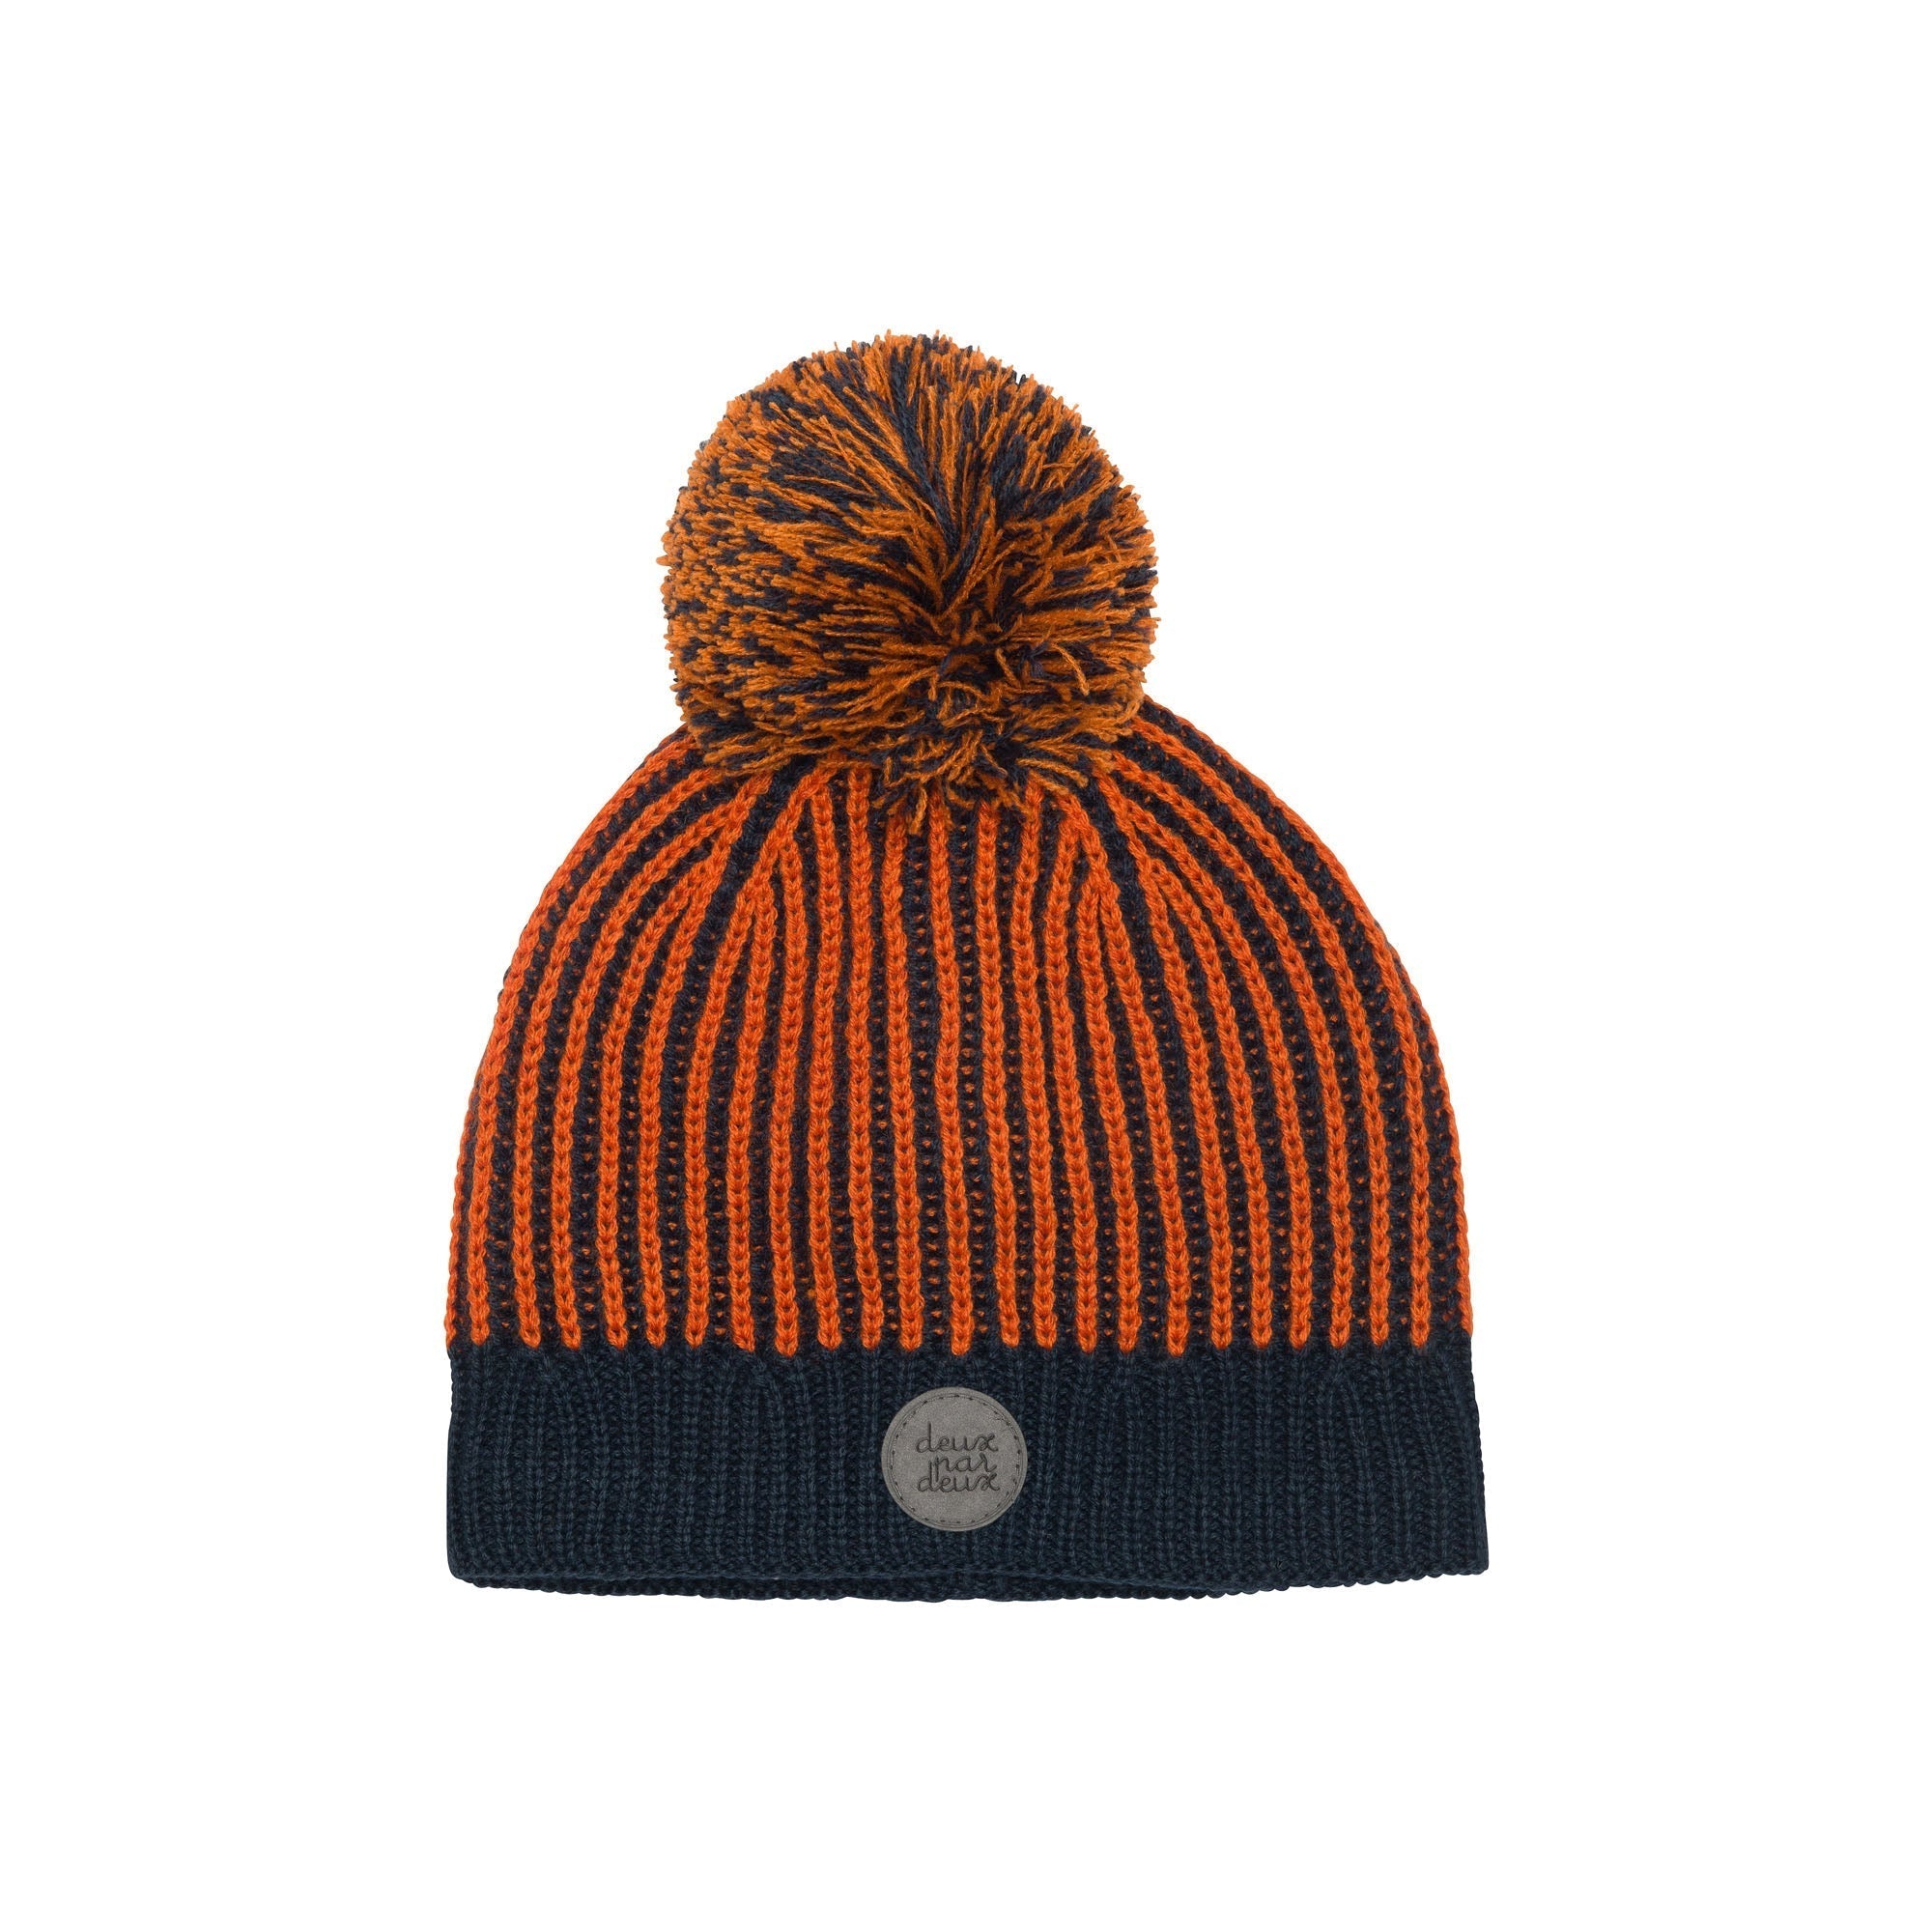 Knit Hat Orange And Navy Blue